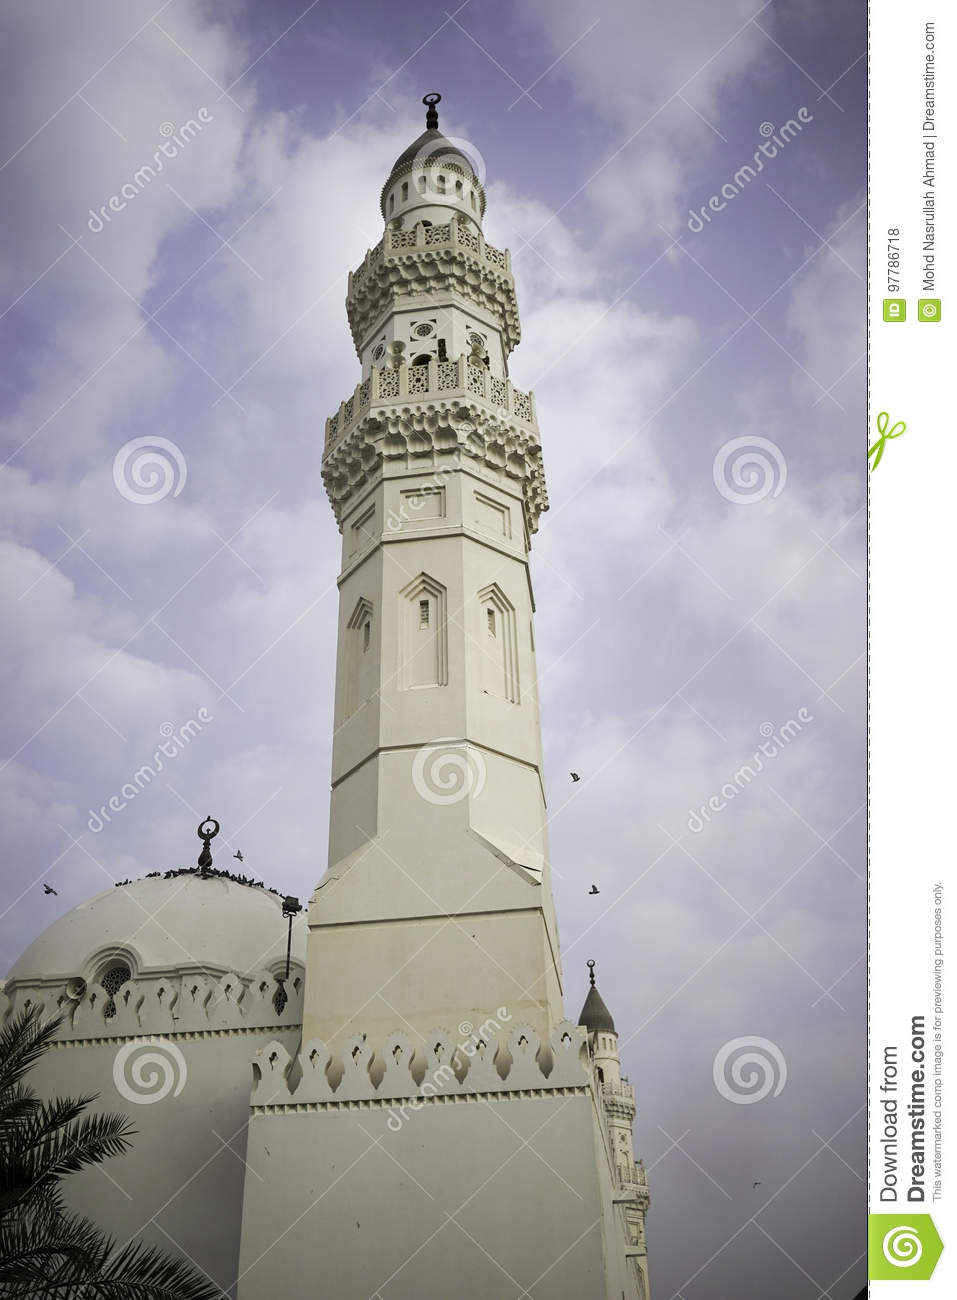 Gambar Masjid Quba Madinah